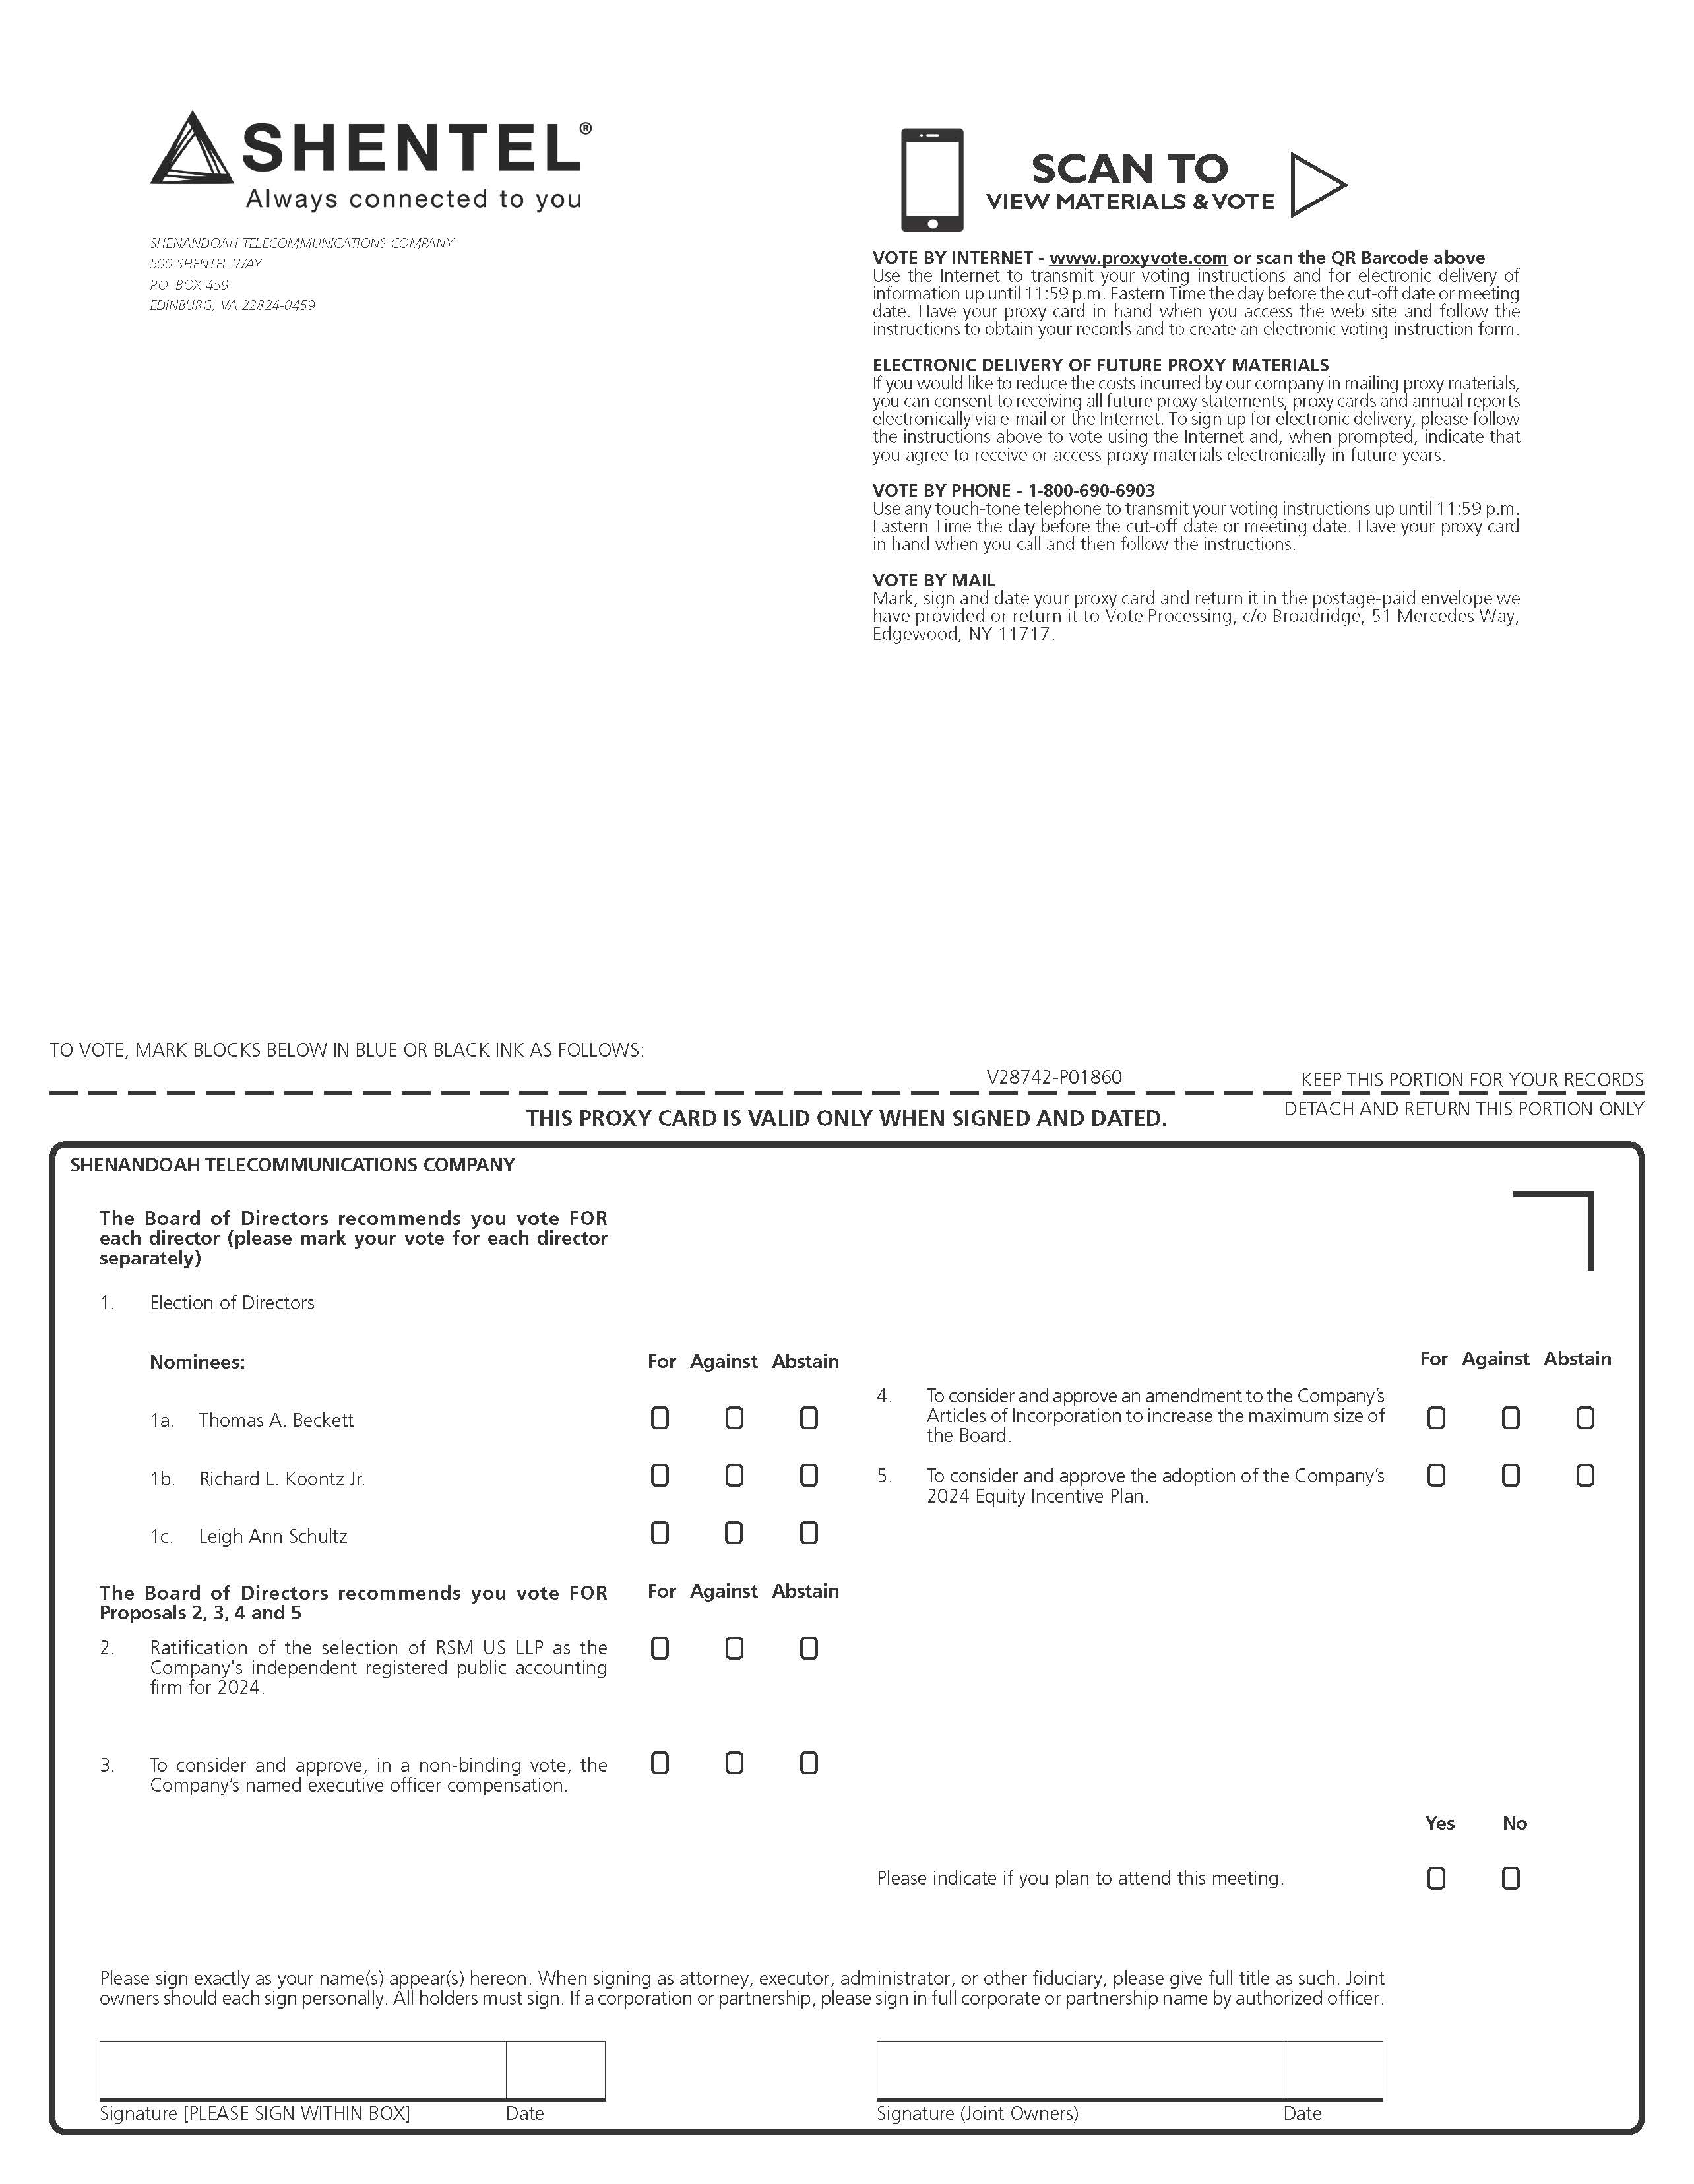 SHENANDOAH TELECOMMUNICATIONS COMPANY_PRXY_P01860_24(#75042) - C3 (page 1).jpg